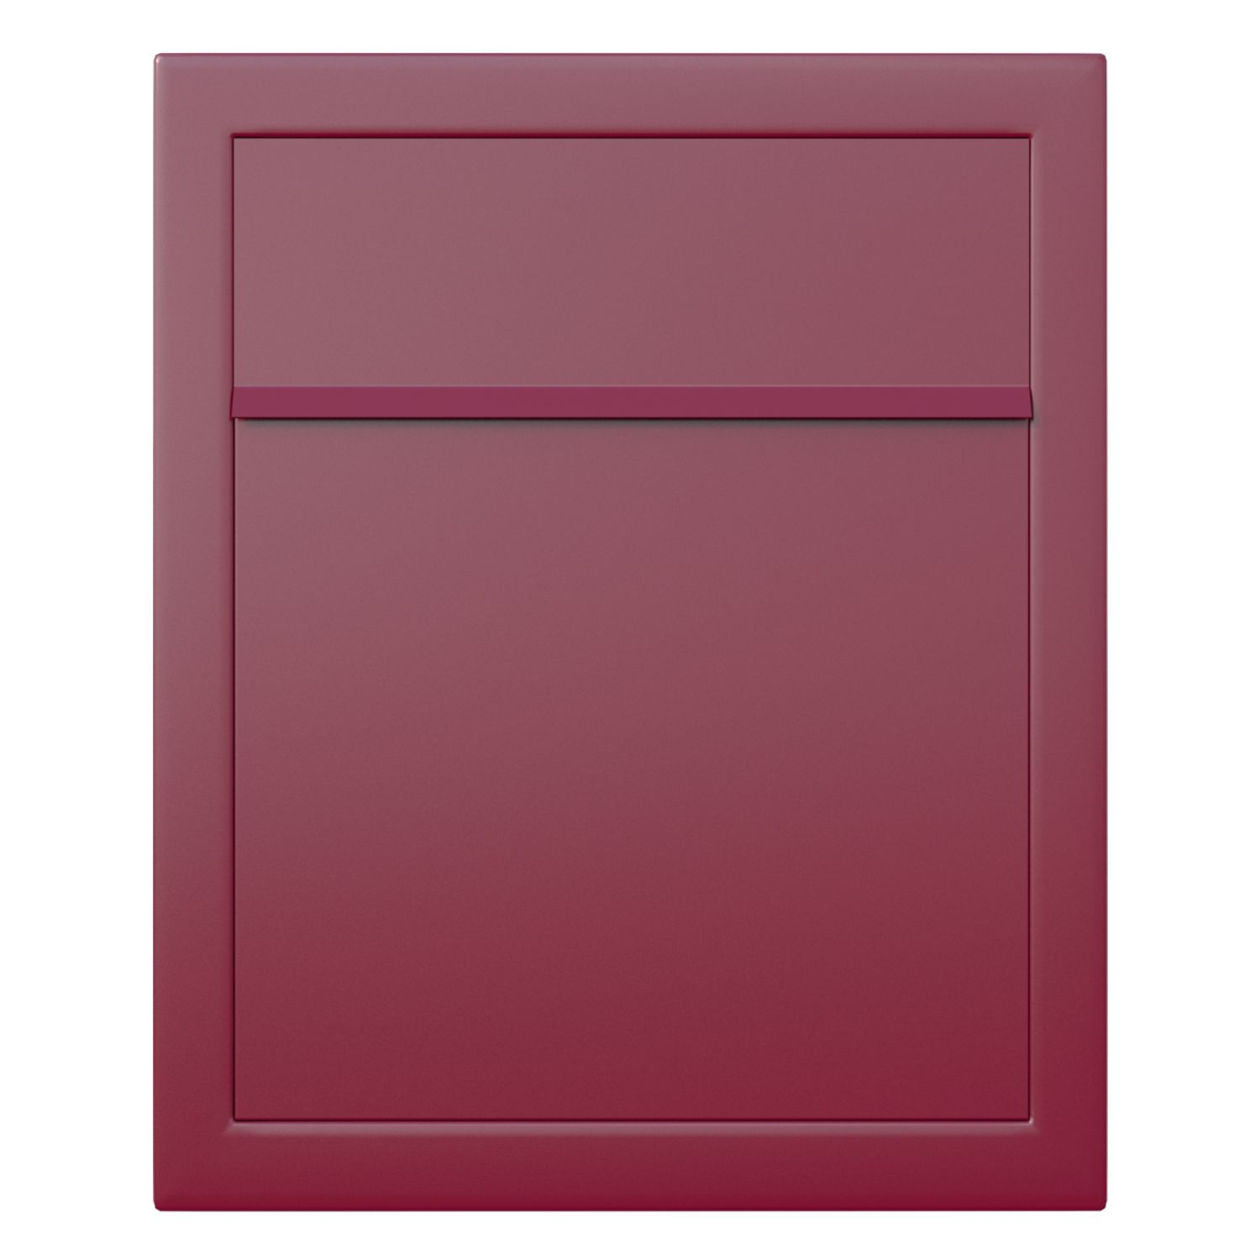 BASE by Bravios - Modern wall-mounted red mailbox